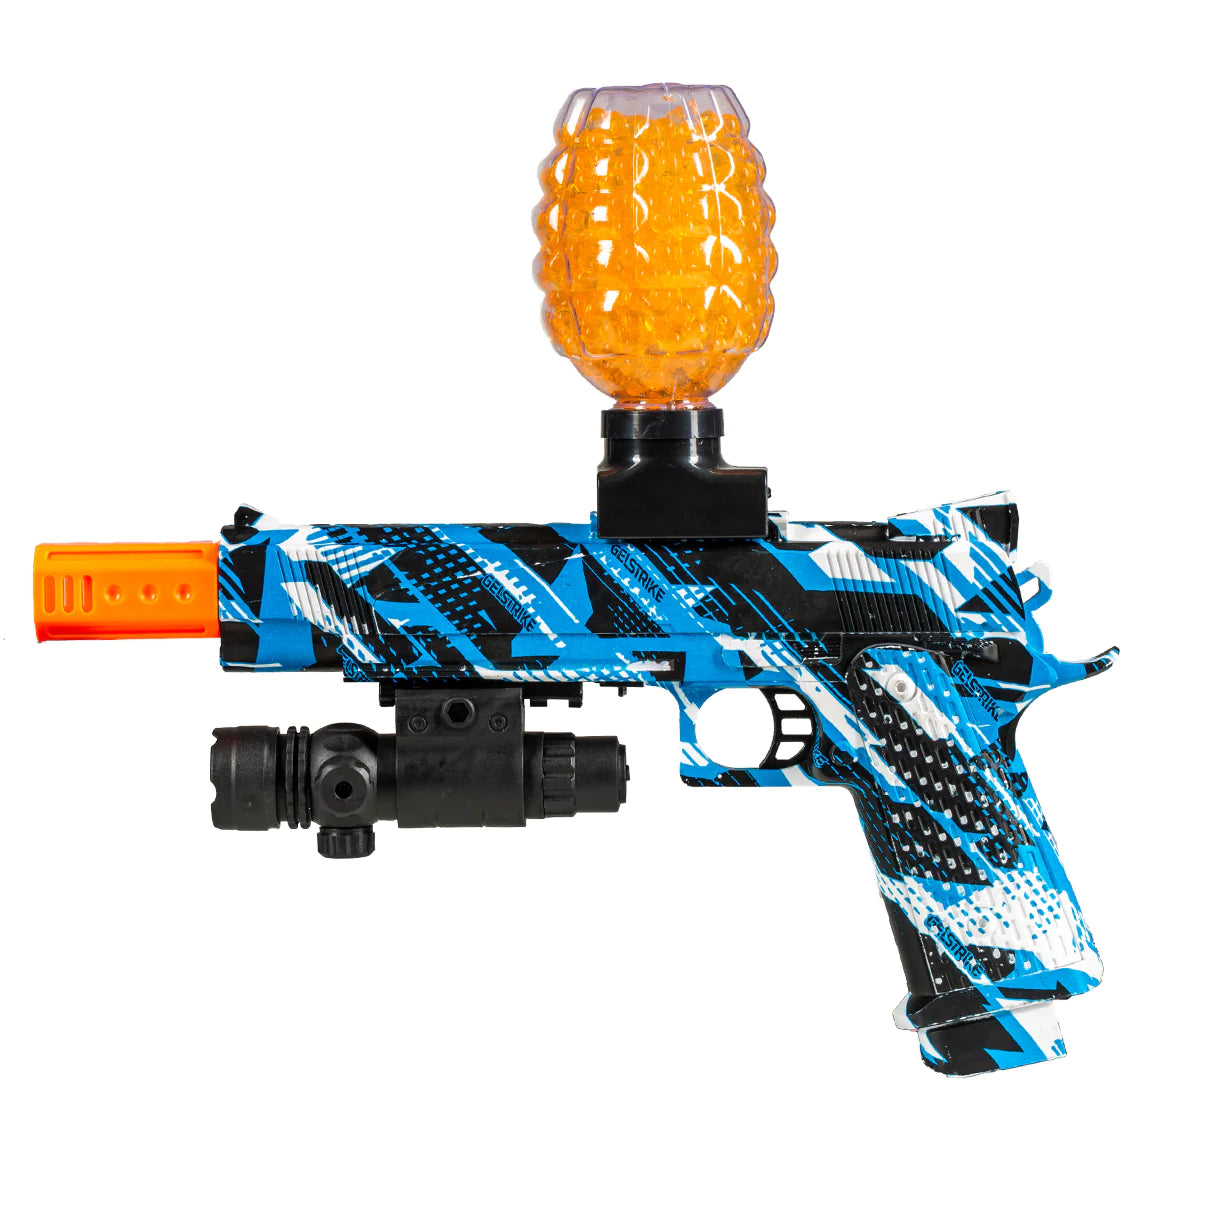 Gellyball Pistol with Laser | Rapid Gel Blaster Gelstrike | Color: Blue